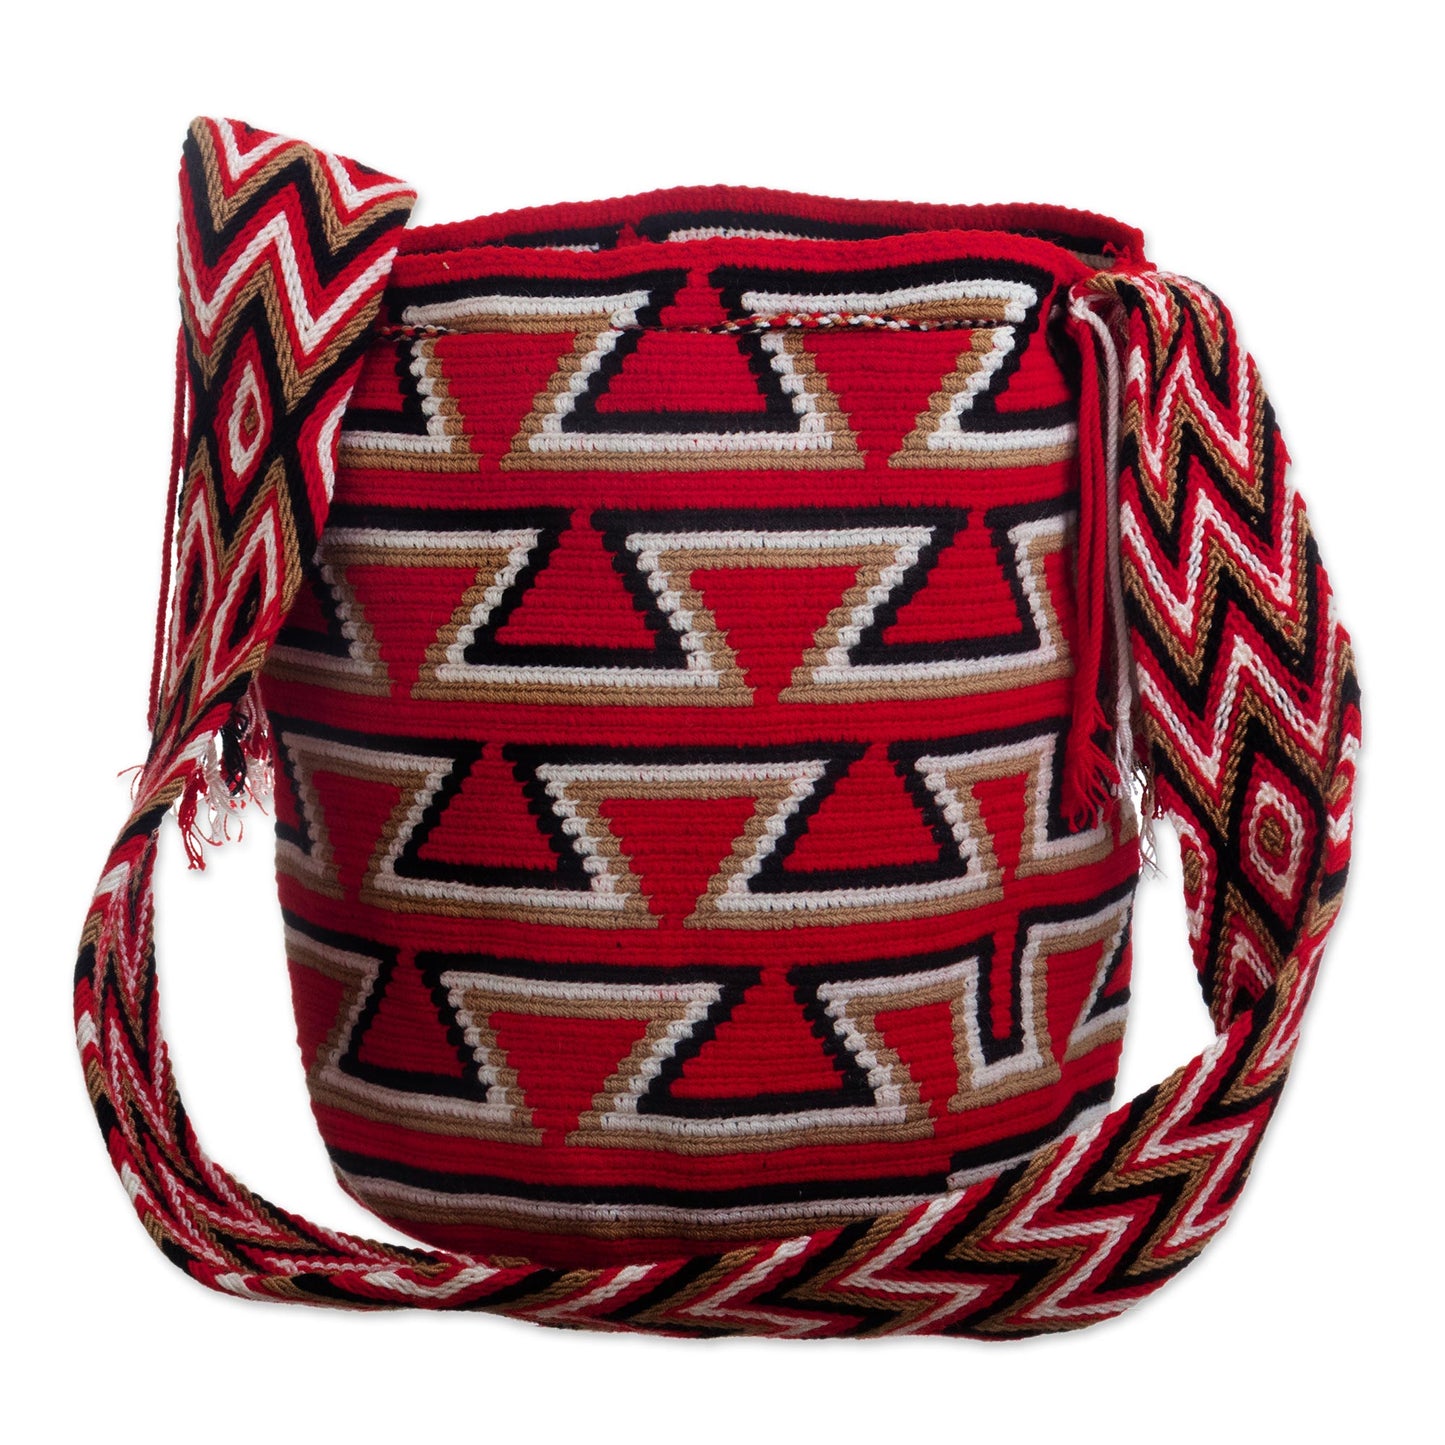 Bonfire Warmth Artisan Crafted Crocheted Shoulder Bag